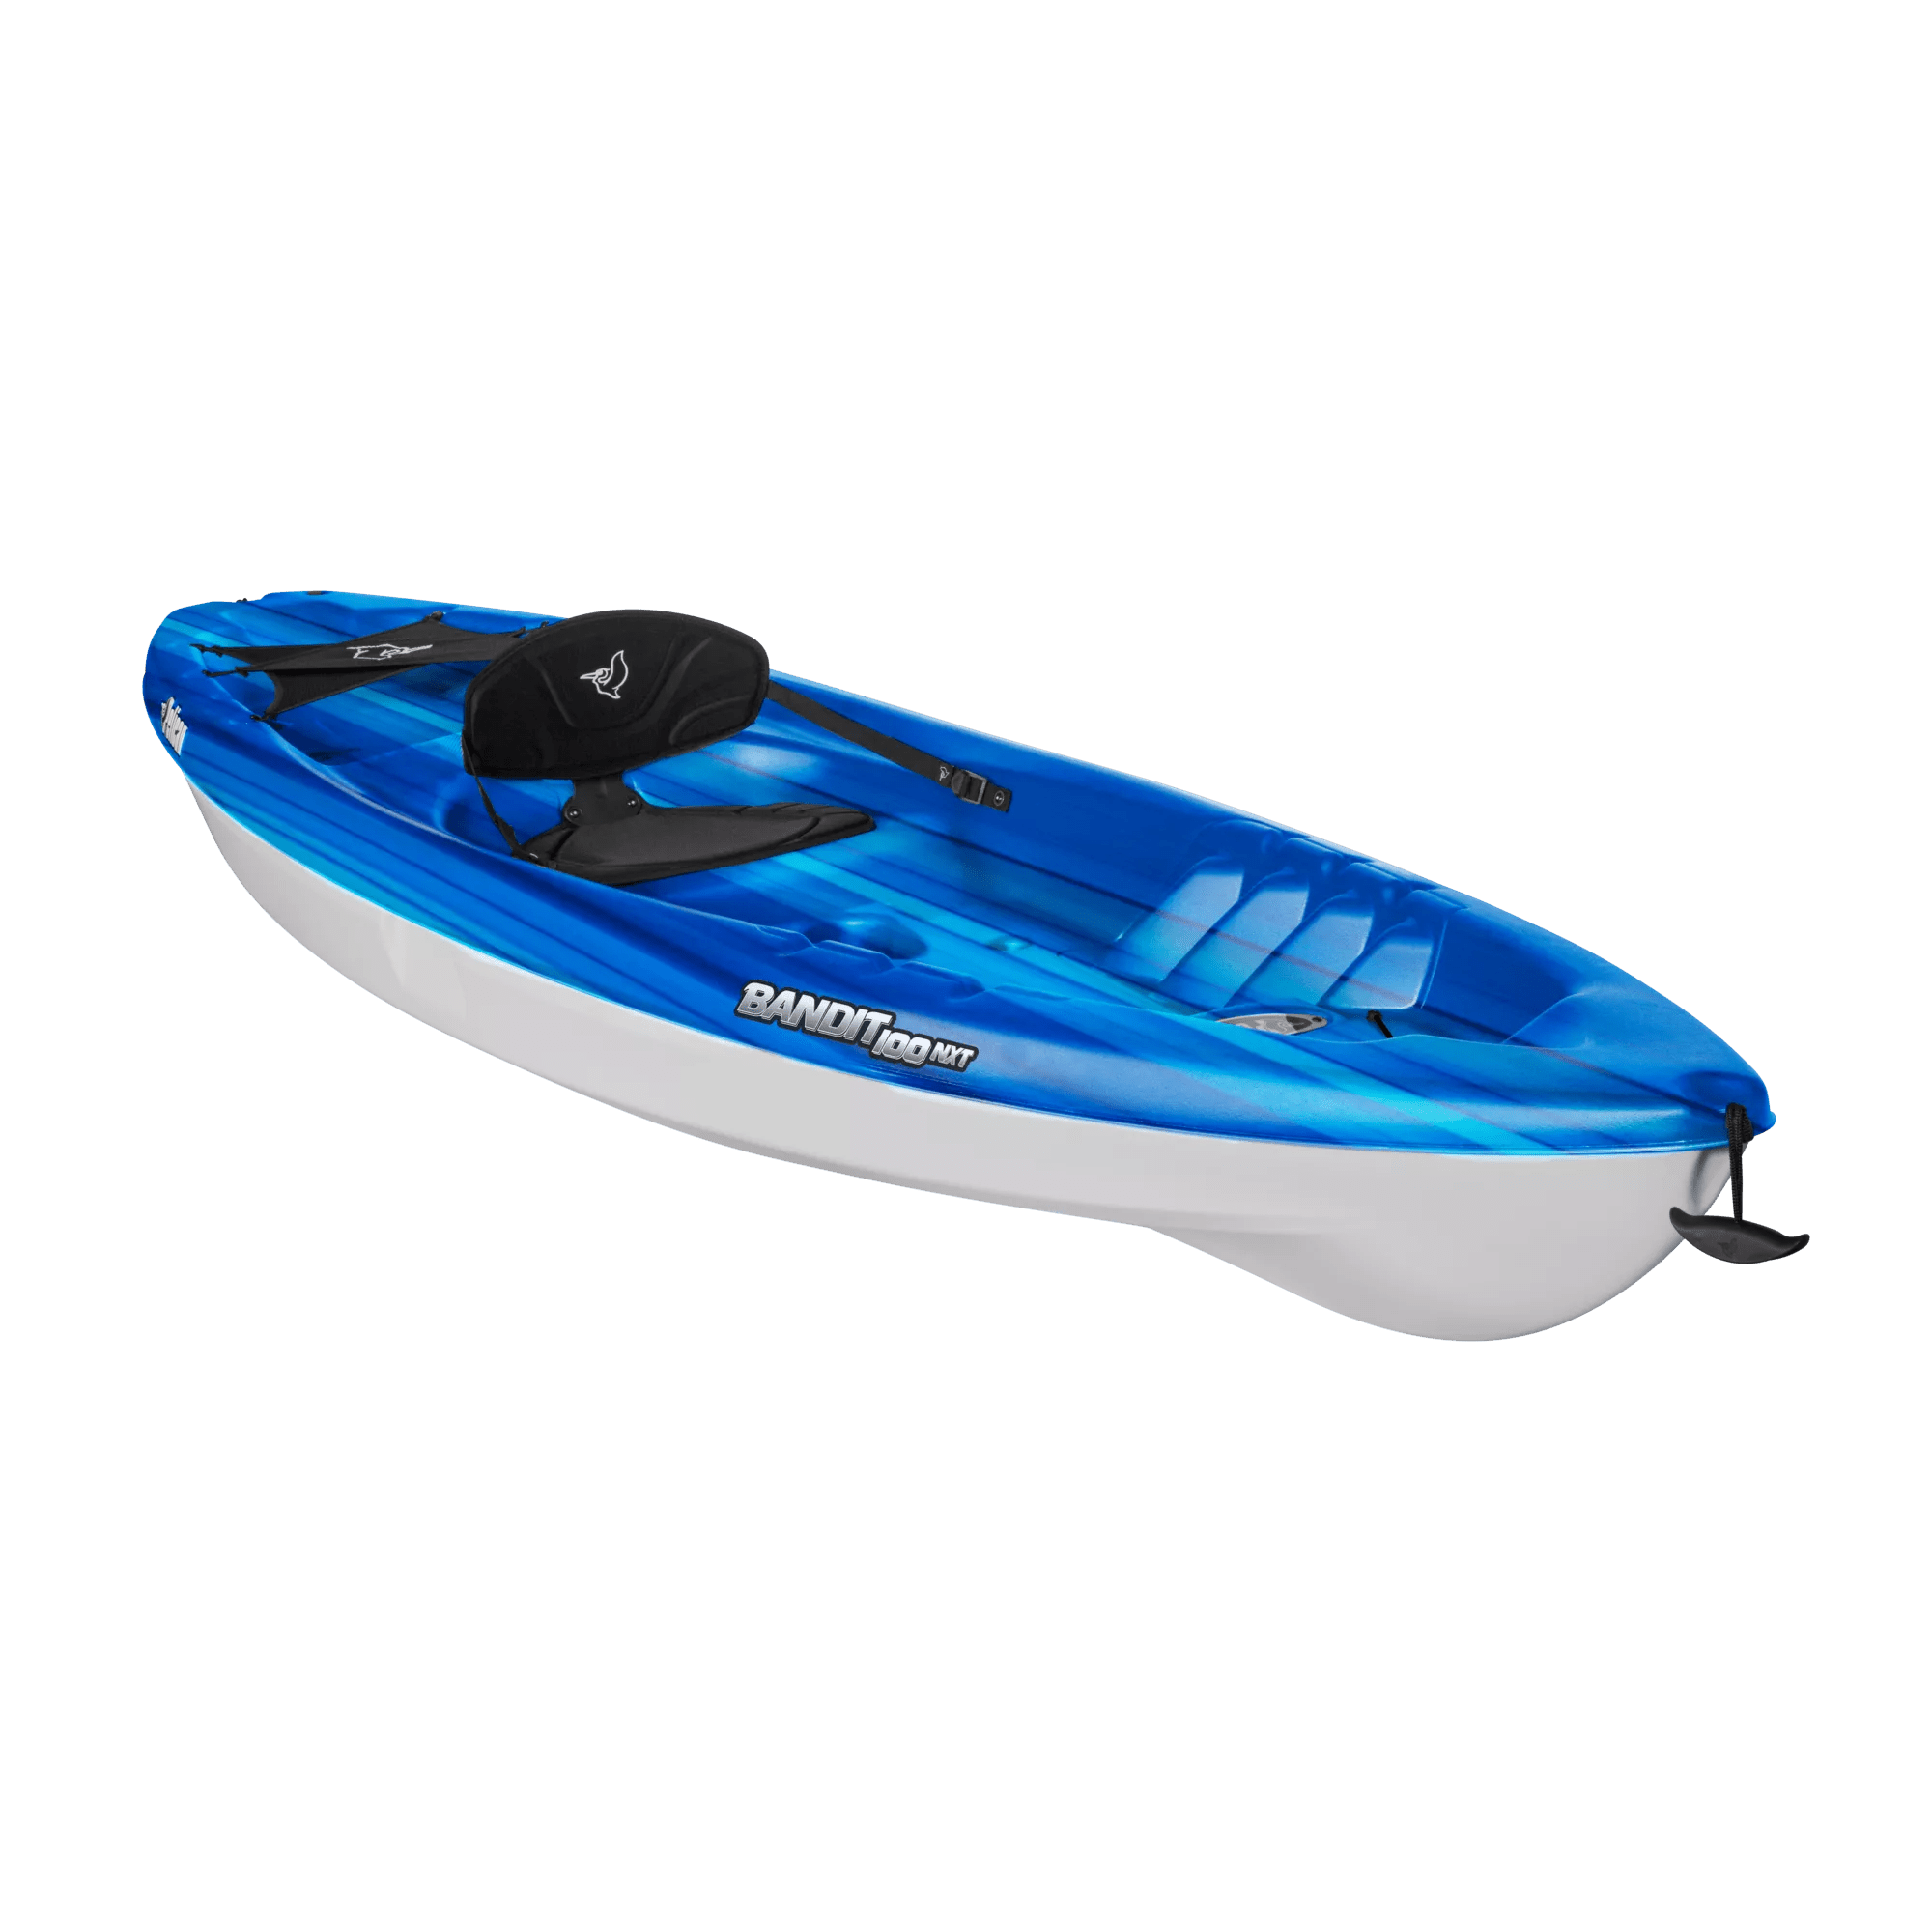 PELICAN - Bandit 100NXT Recreational Kayak - Dark blue - KVF10P300 - ISO 